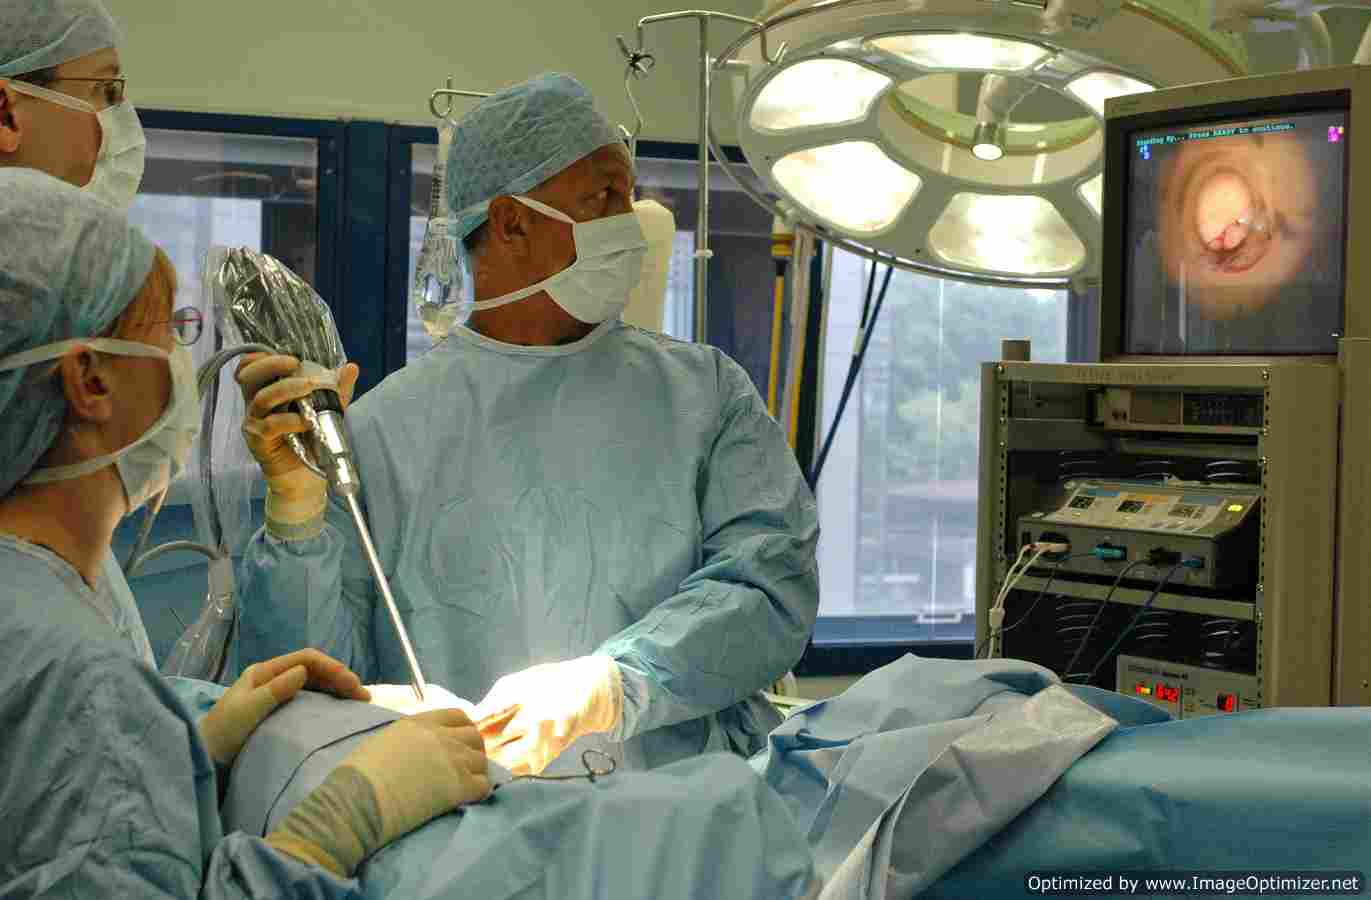 Robotic surgery starts at Liverpool